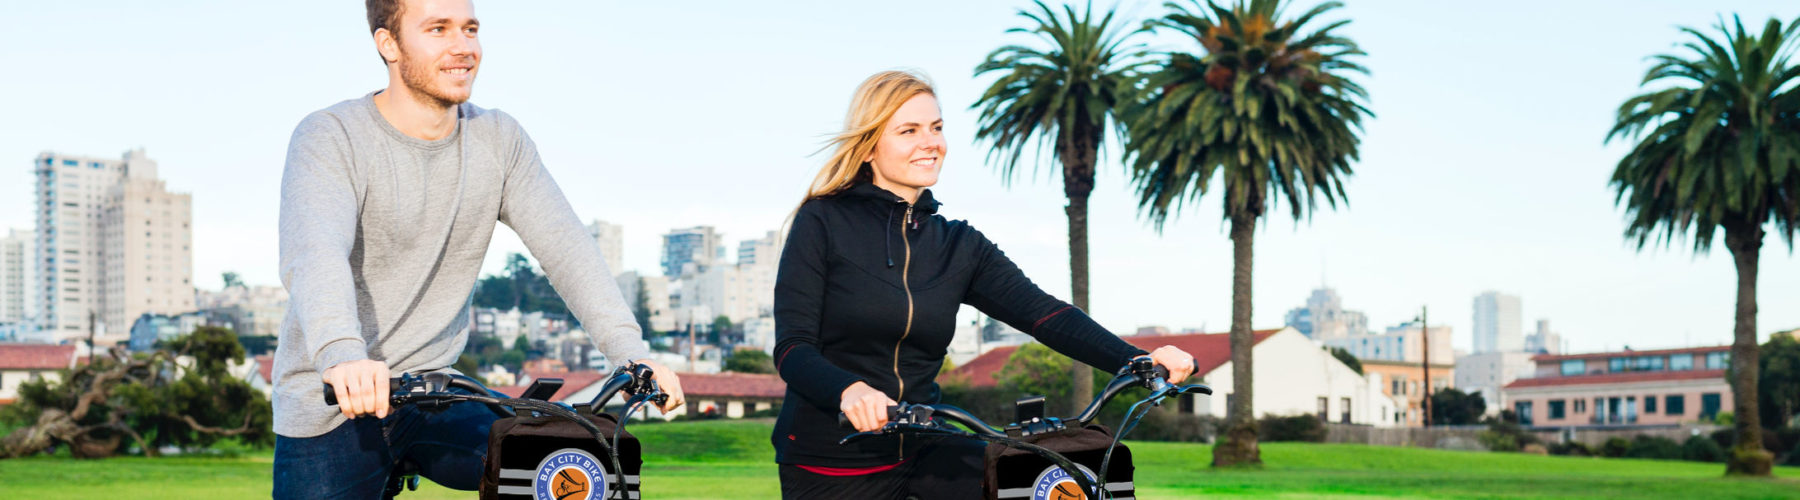 Riding E Bike with Bike Bag - San Francisco - Bay City Bike